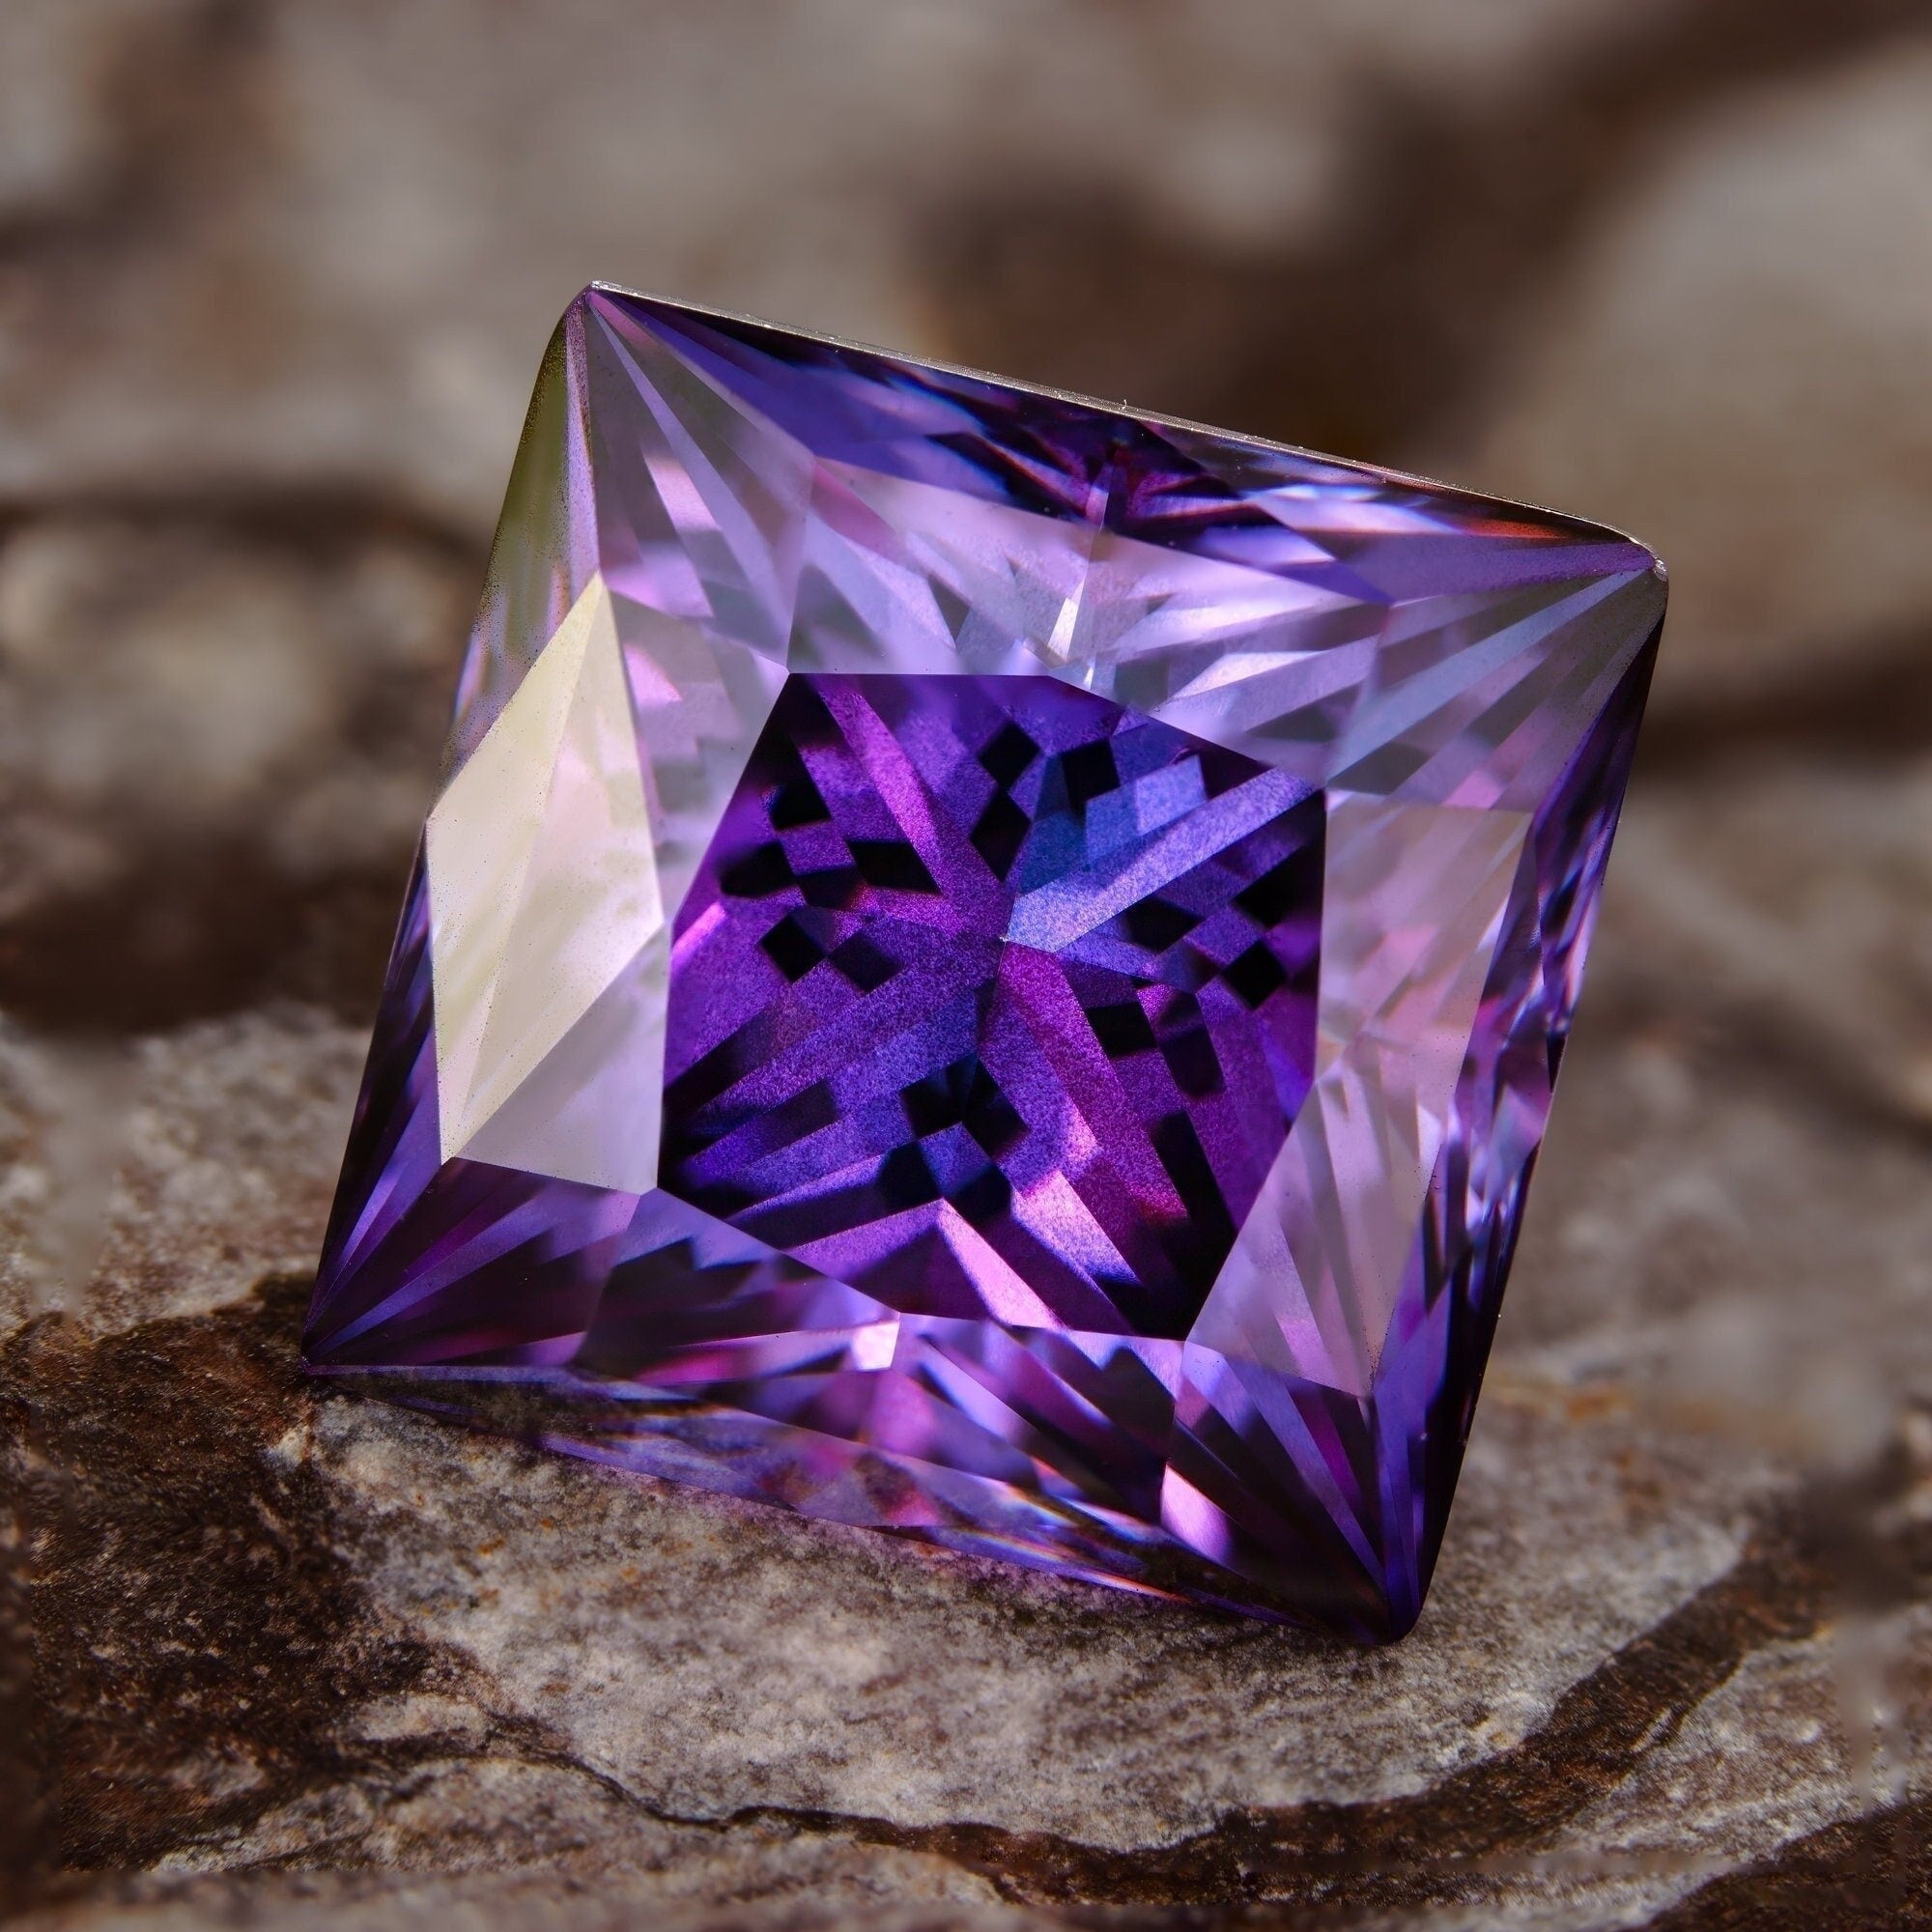 Square princess cut loose moissanite certified vvs1 gra, imperial purple moissanite gemstone, colored moissanite, raw moissanite